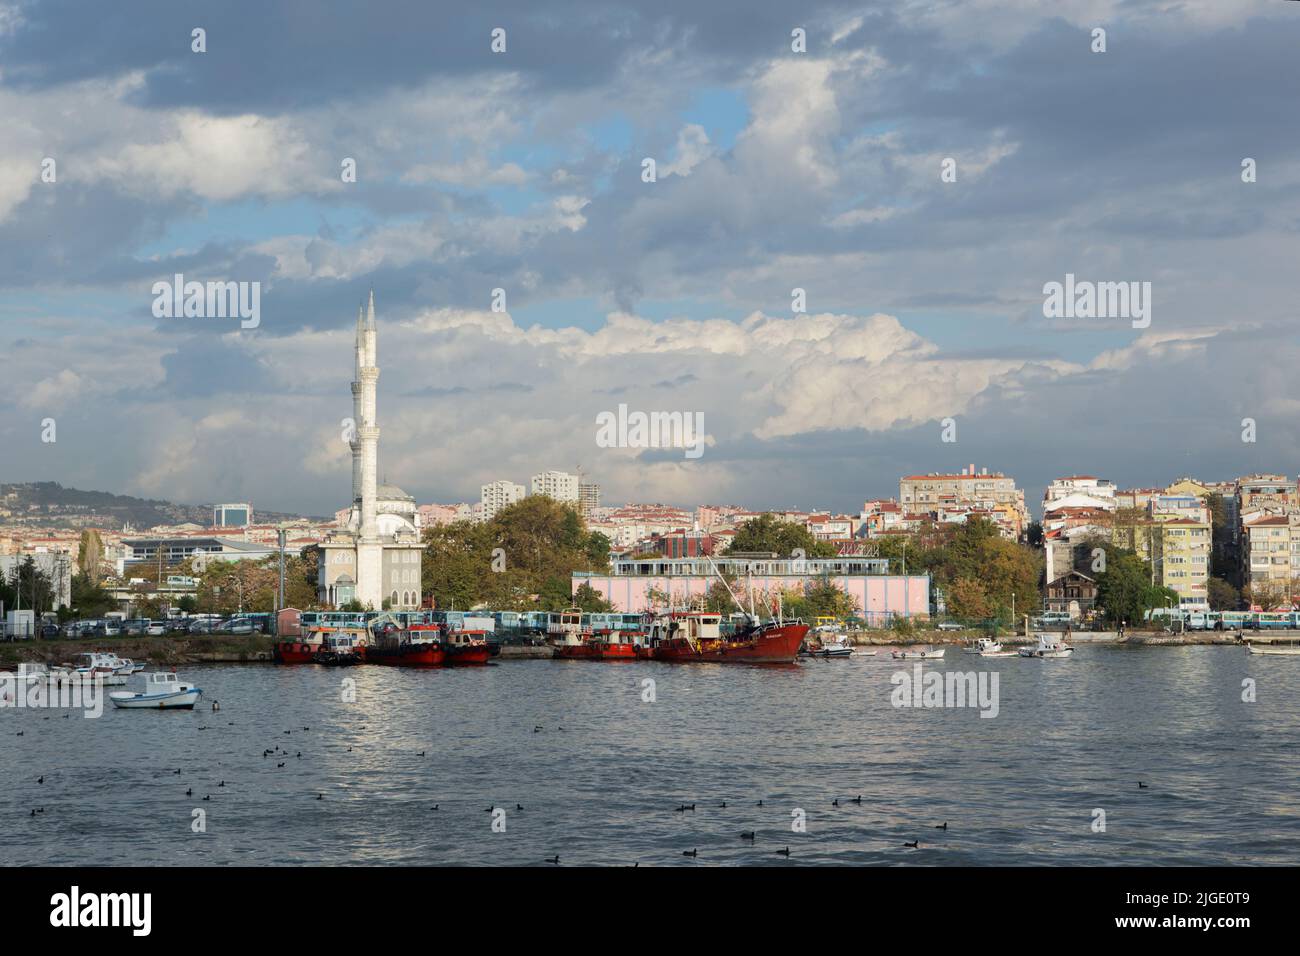 View to Kadikoy quay, Haydarpasa mosque, and Kadikoy district of Istanbul city, Turkey, from the Bosporus strait Stock Photo